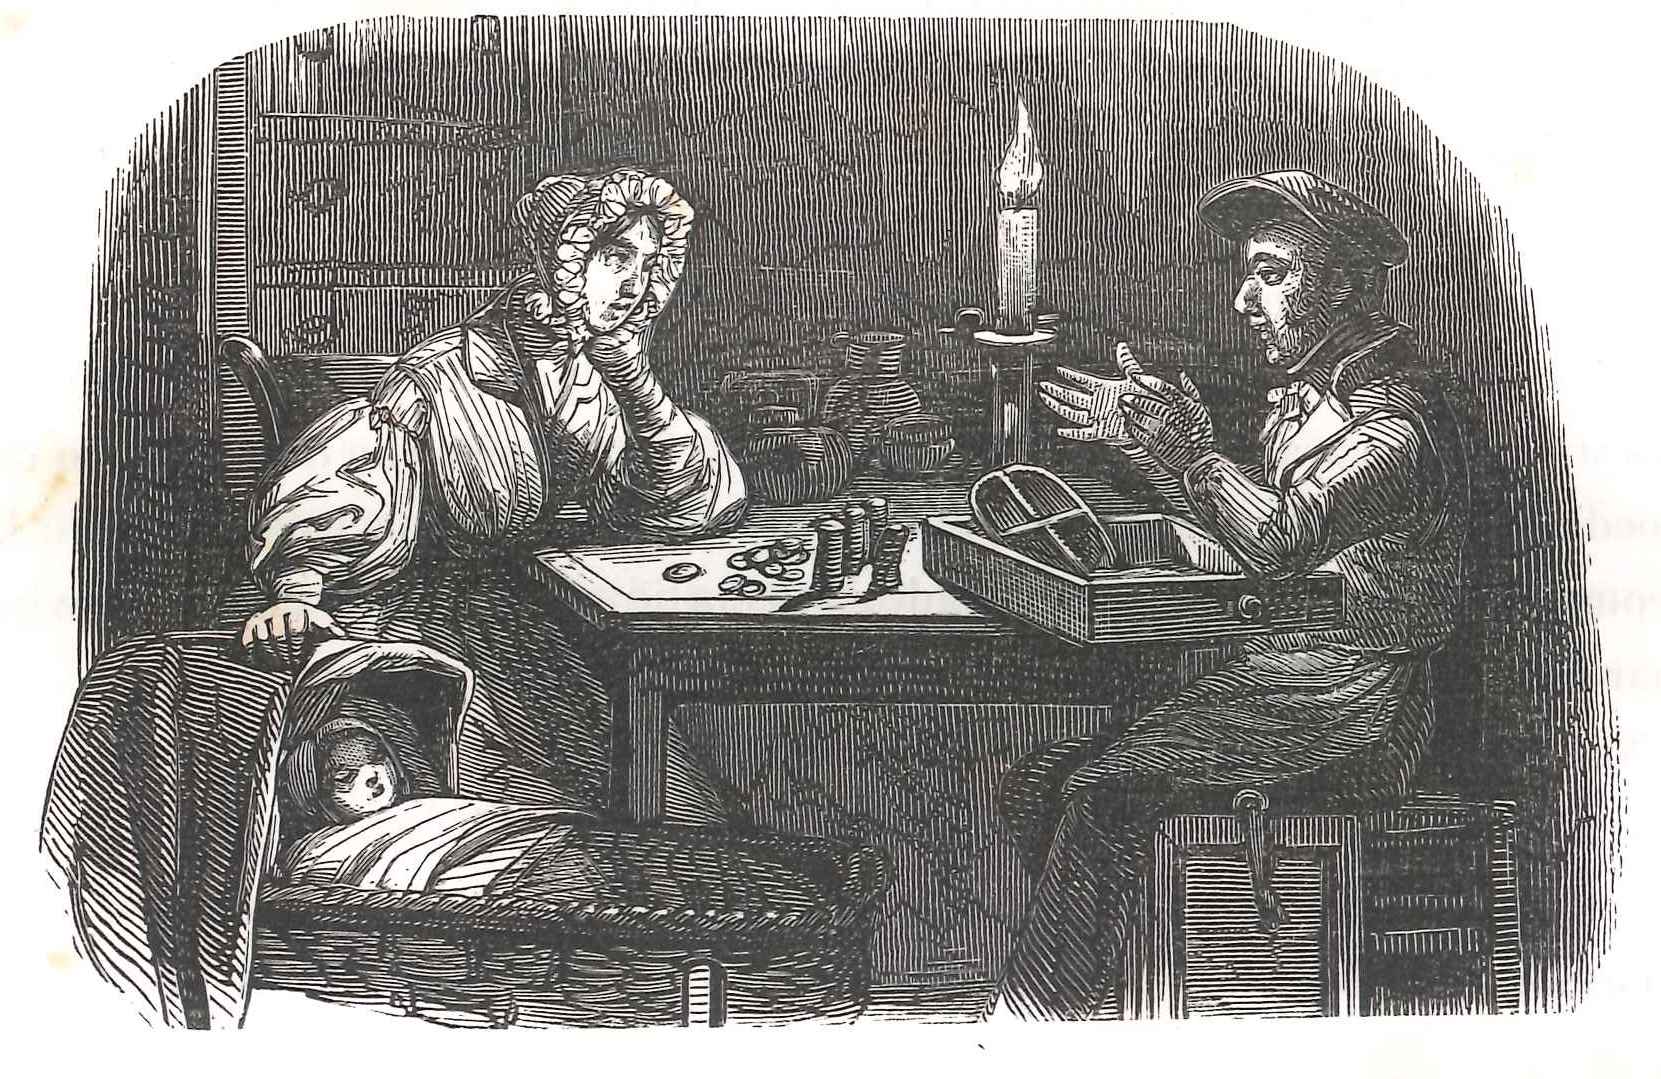 De kruidenier maakt de kas op. 'Karakterschetsen', 1841. HMDB.